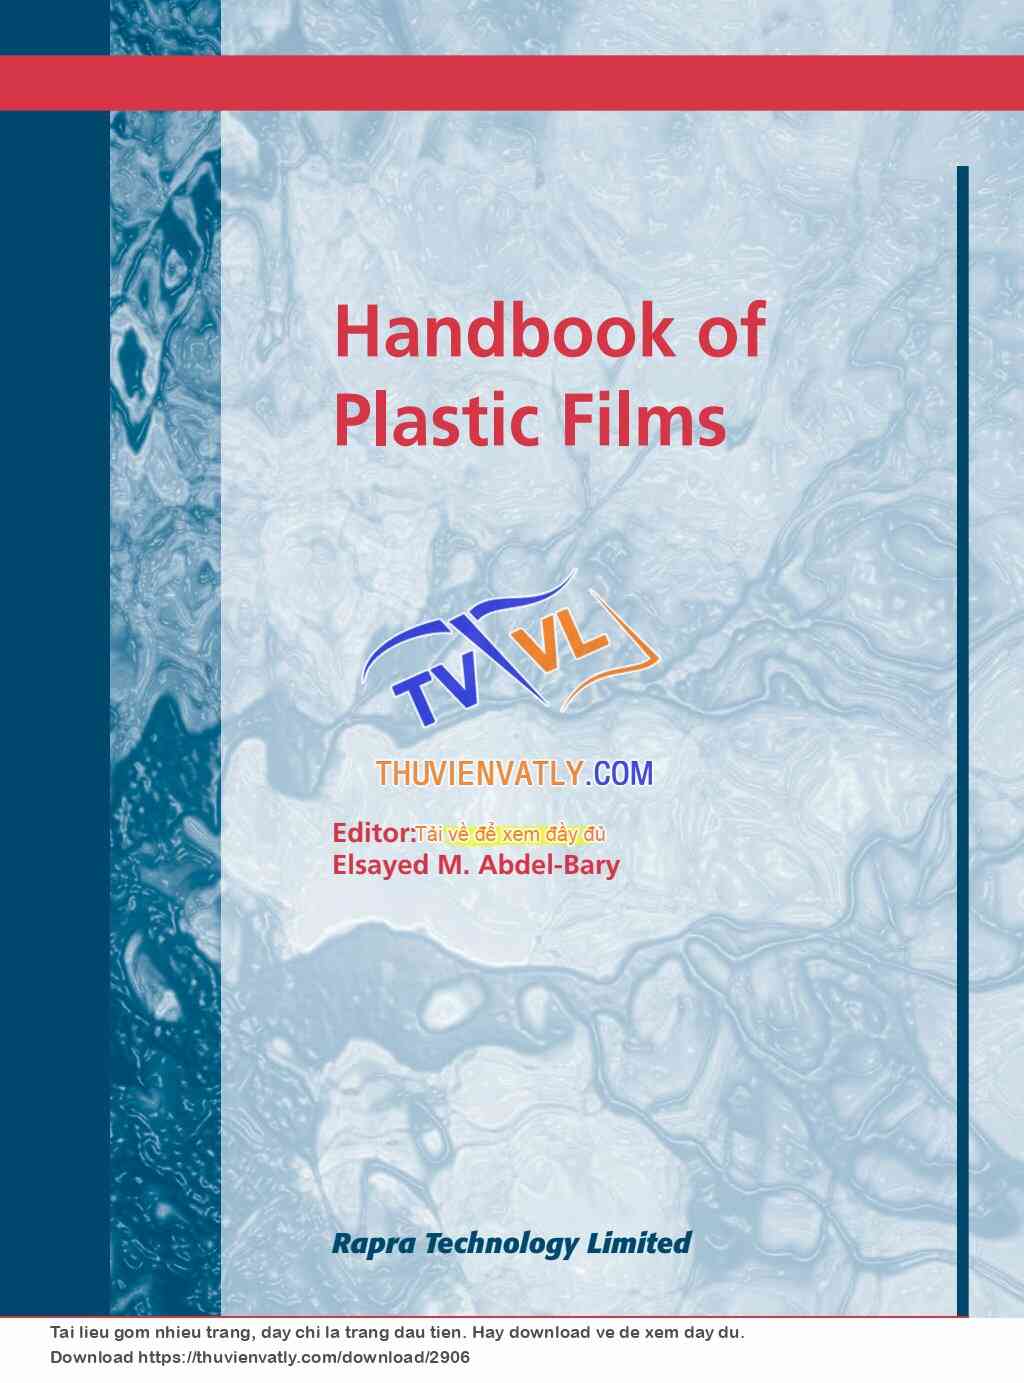 Handbook of Plastic Films (E.M. Abdel-Bary)